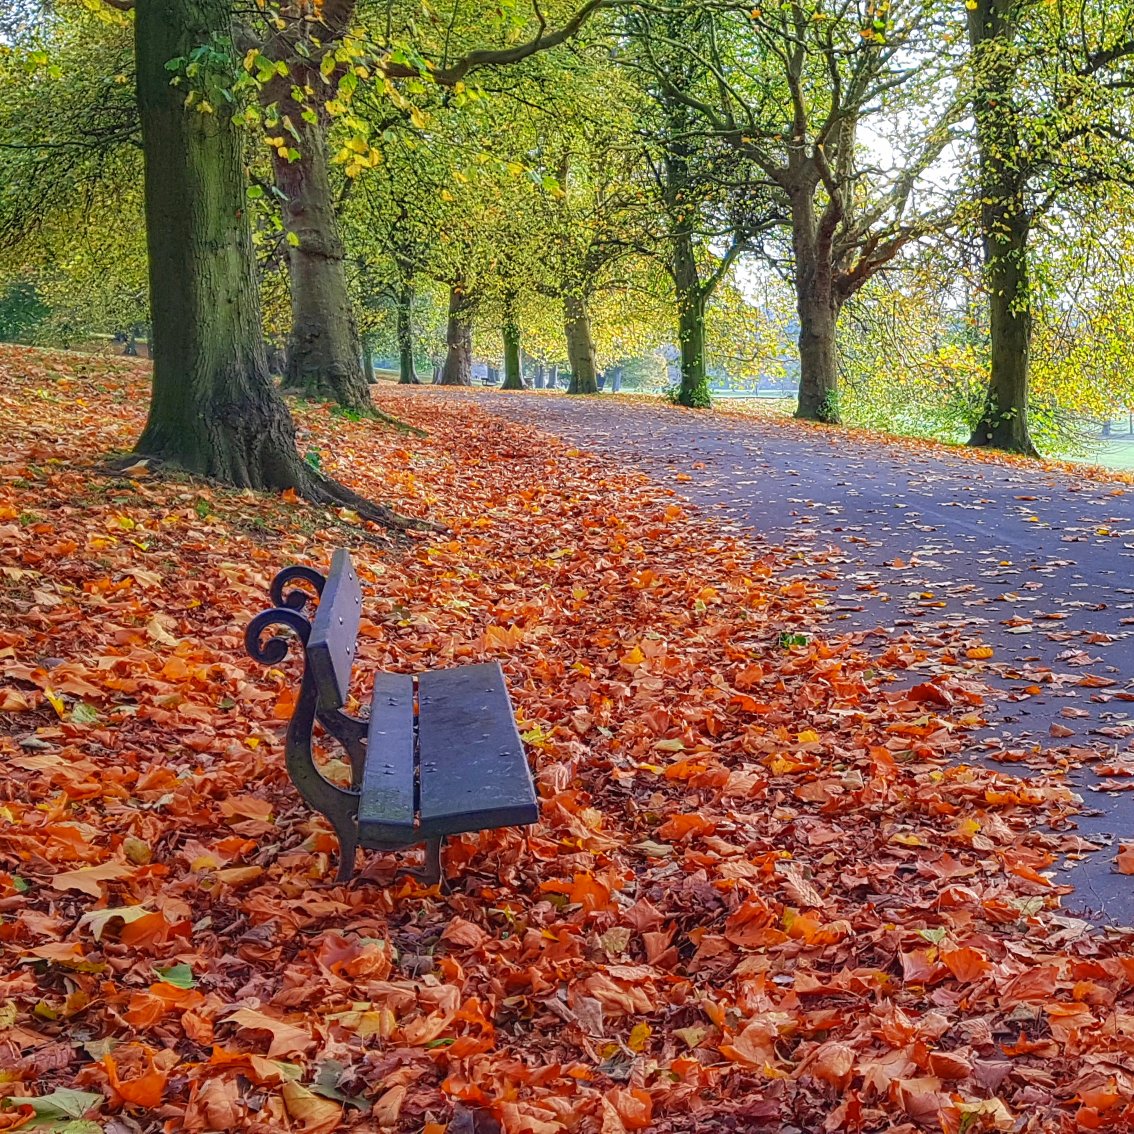 Beautiful autumnal walkway at Roundhay Park 🍁🍂🍁
#Leeds #uk #Yorkshire #visitengland #visitleeds #westyorkshire #Travel #Traveldiaries #Europe #picoftheday #topukphoto #autumn #autumnal #Roundhaypark #outdoor #colours #healthyliving #morningwalk #Inspiration